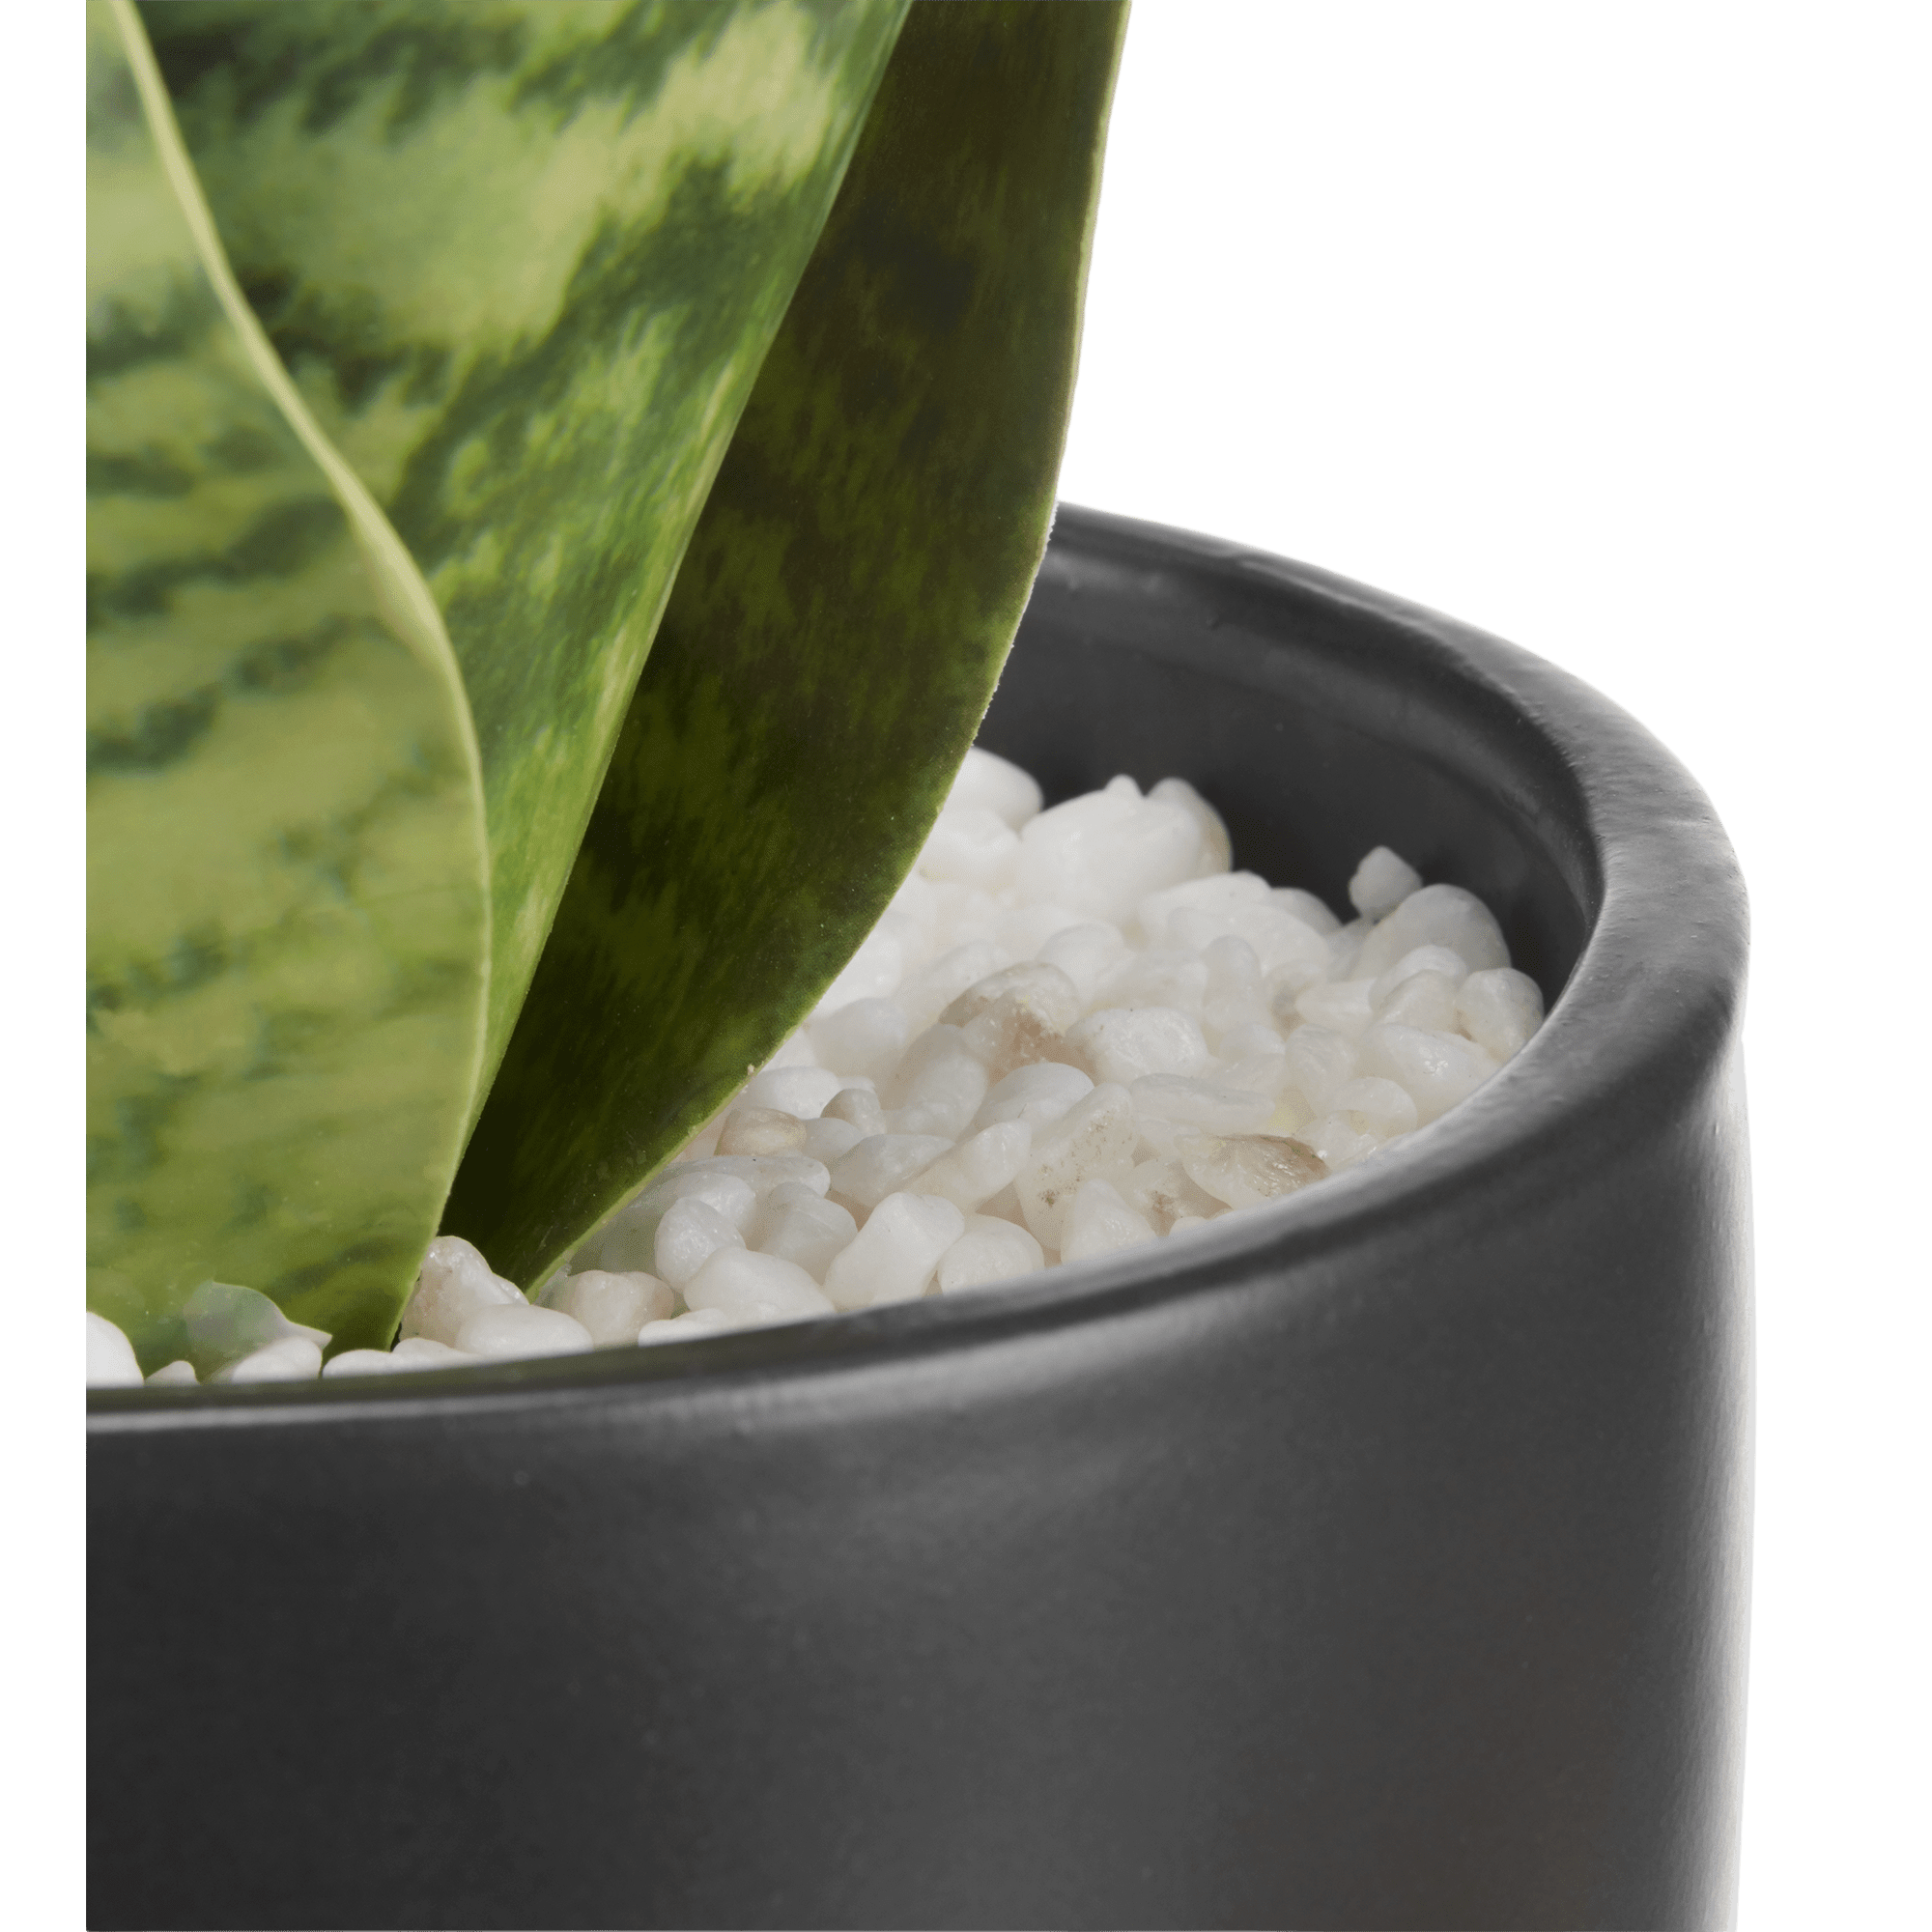 Artificial Plant in Black Matte Ceramic Pot